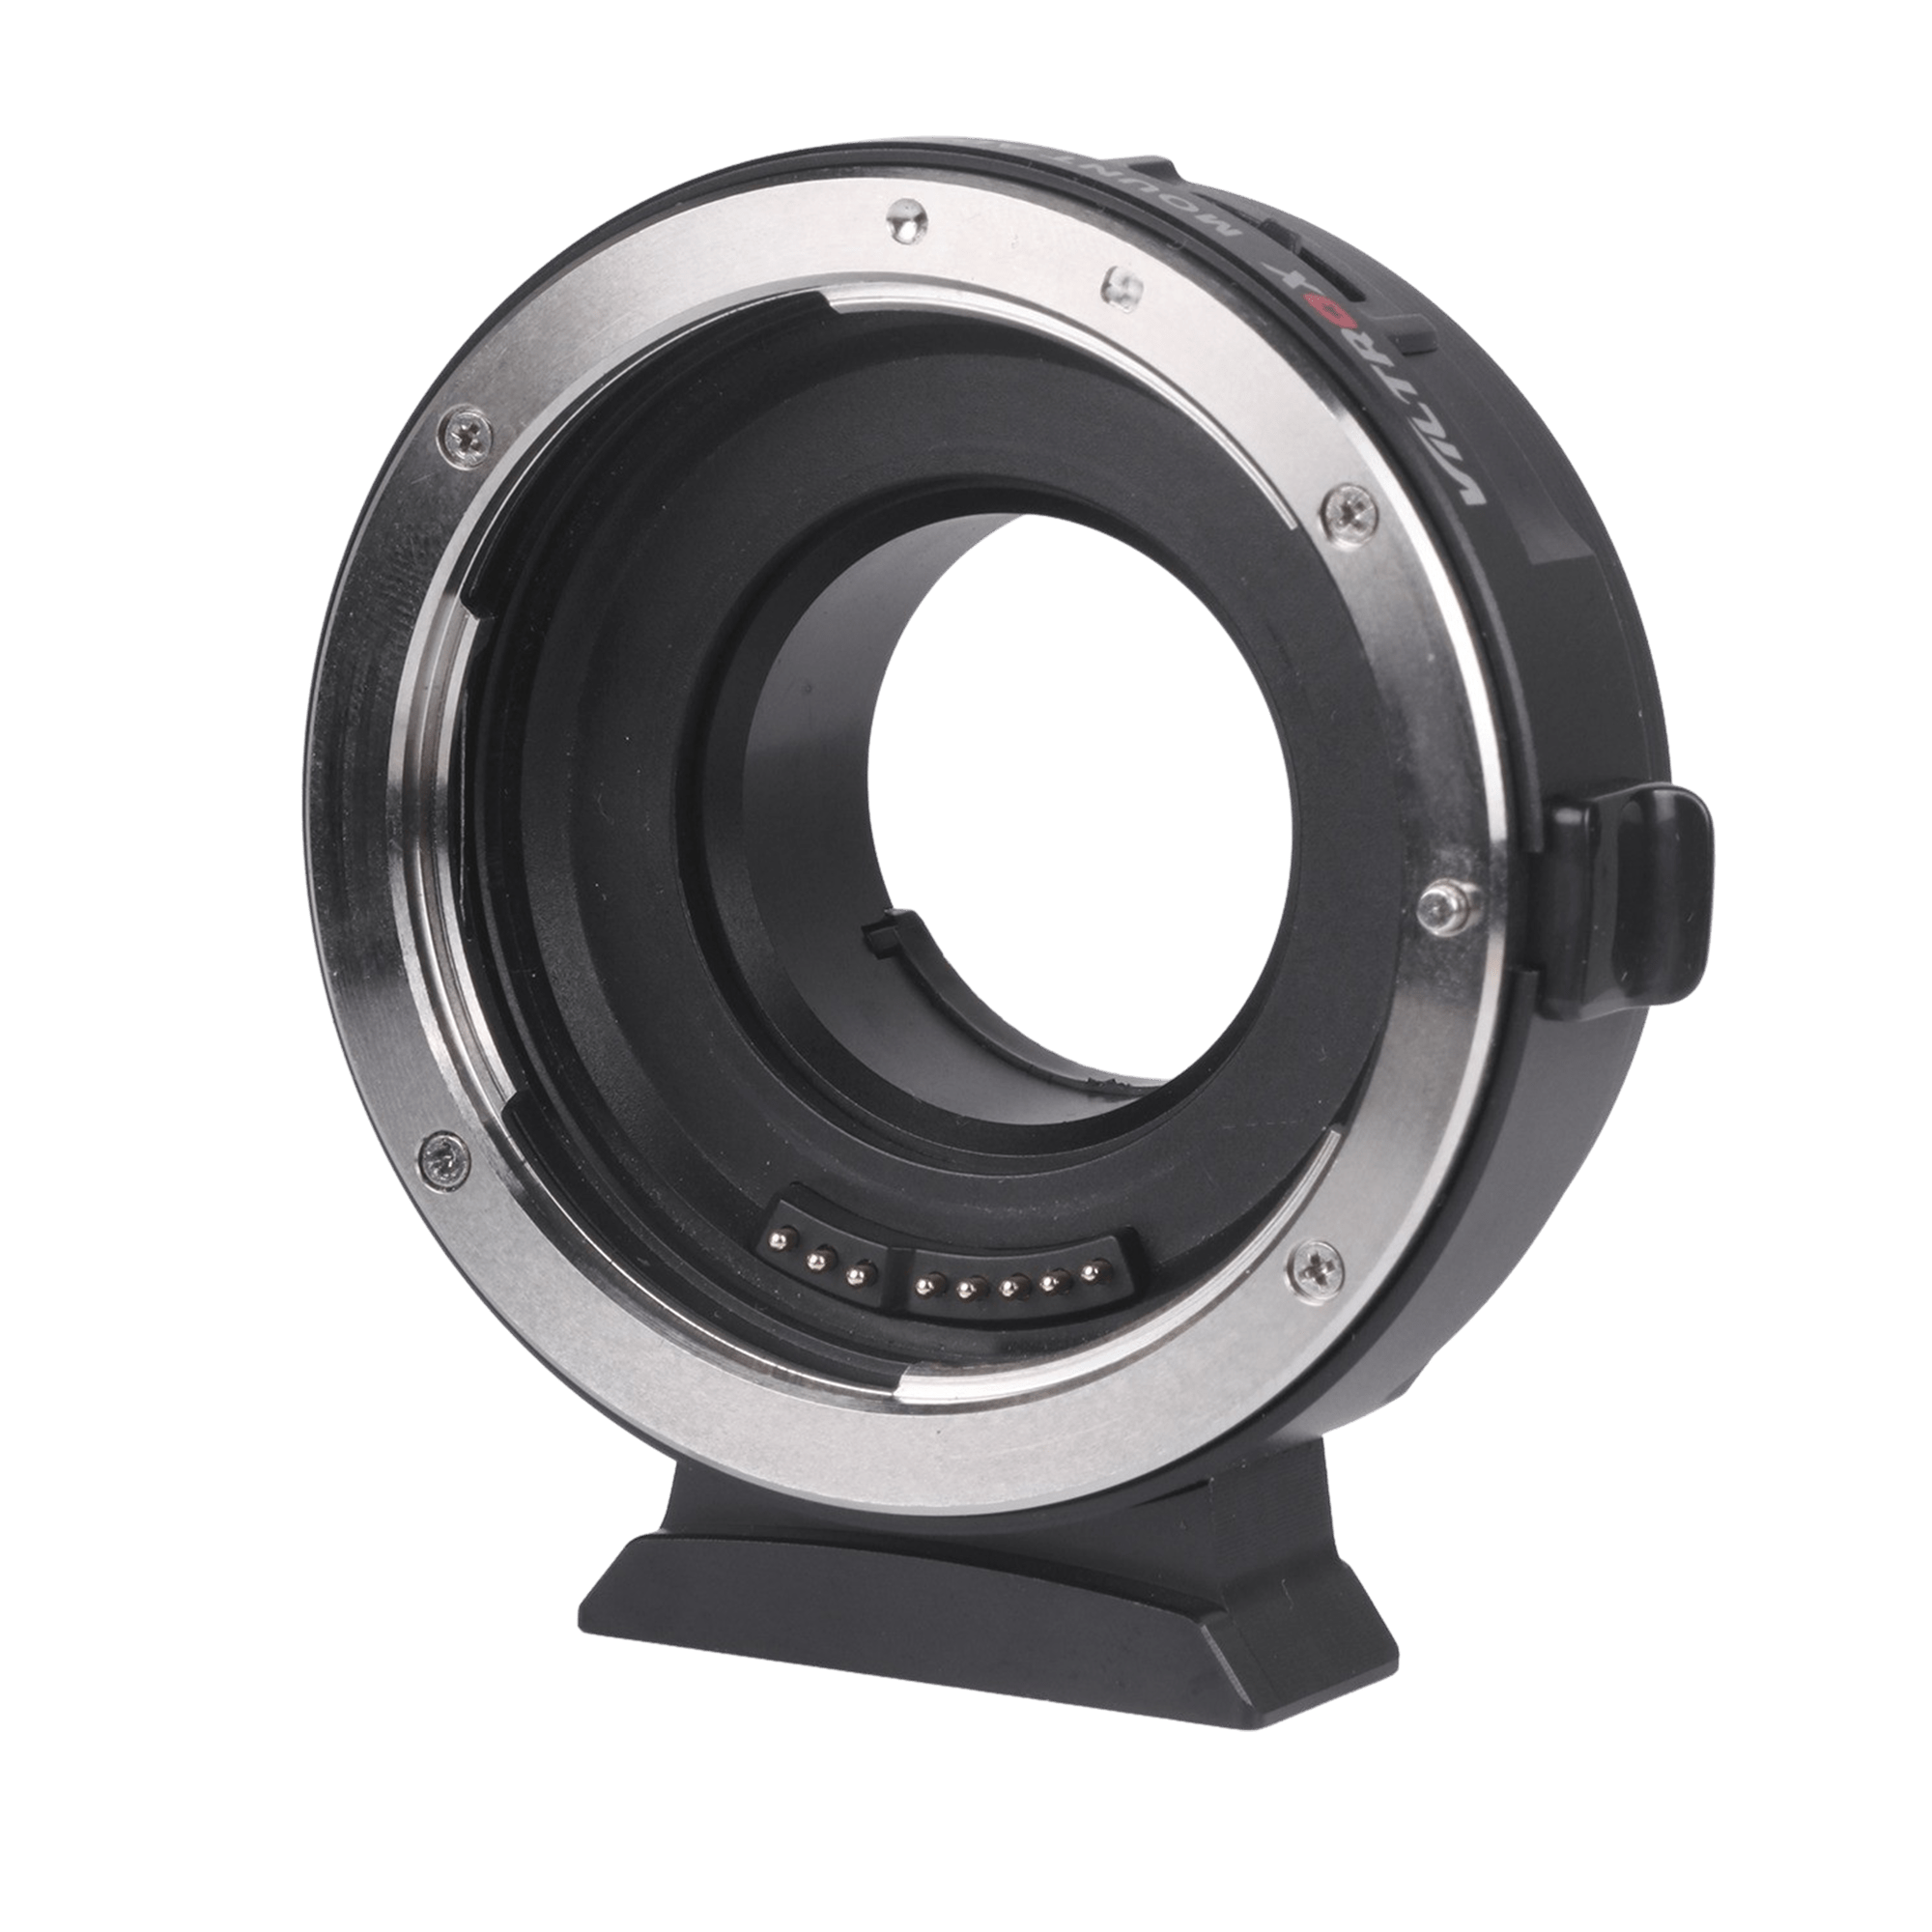 Viltrox EF M1 adapter for Canon EF/EF S lenses on MFT cameras – Rollei